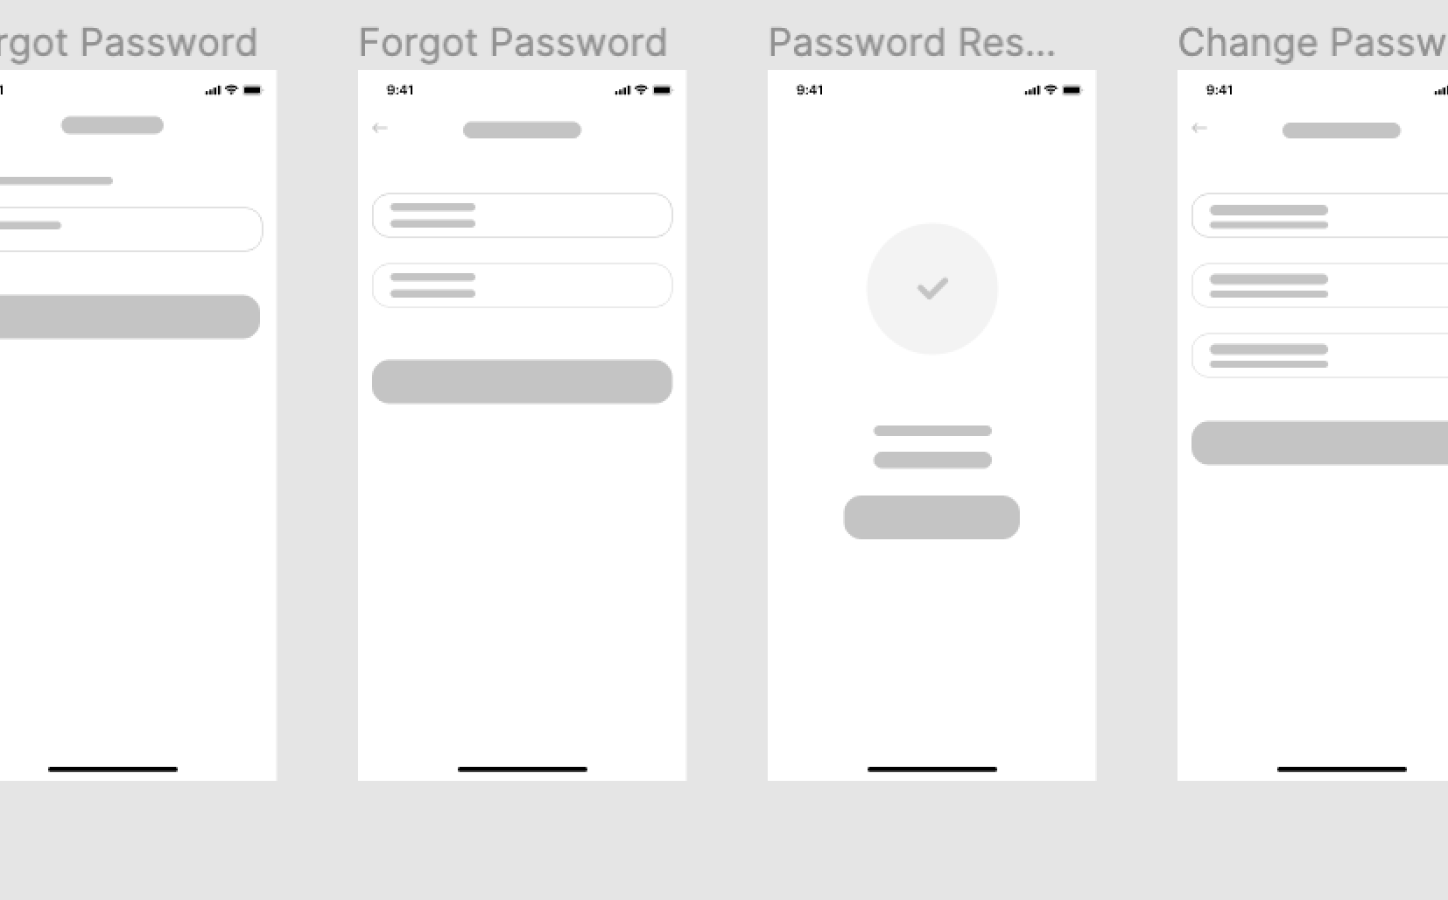 Screens for forgot password, password reset and change password.